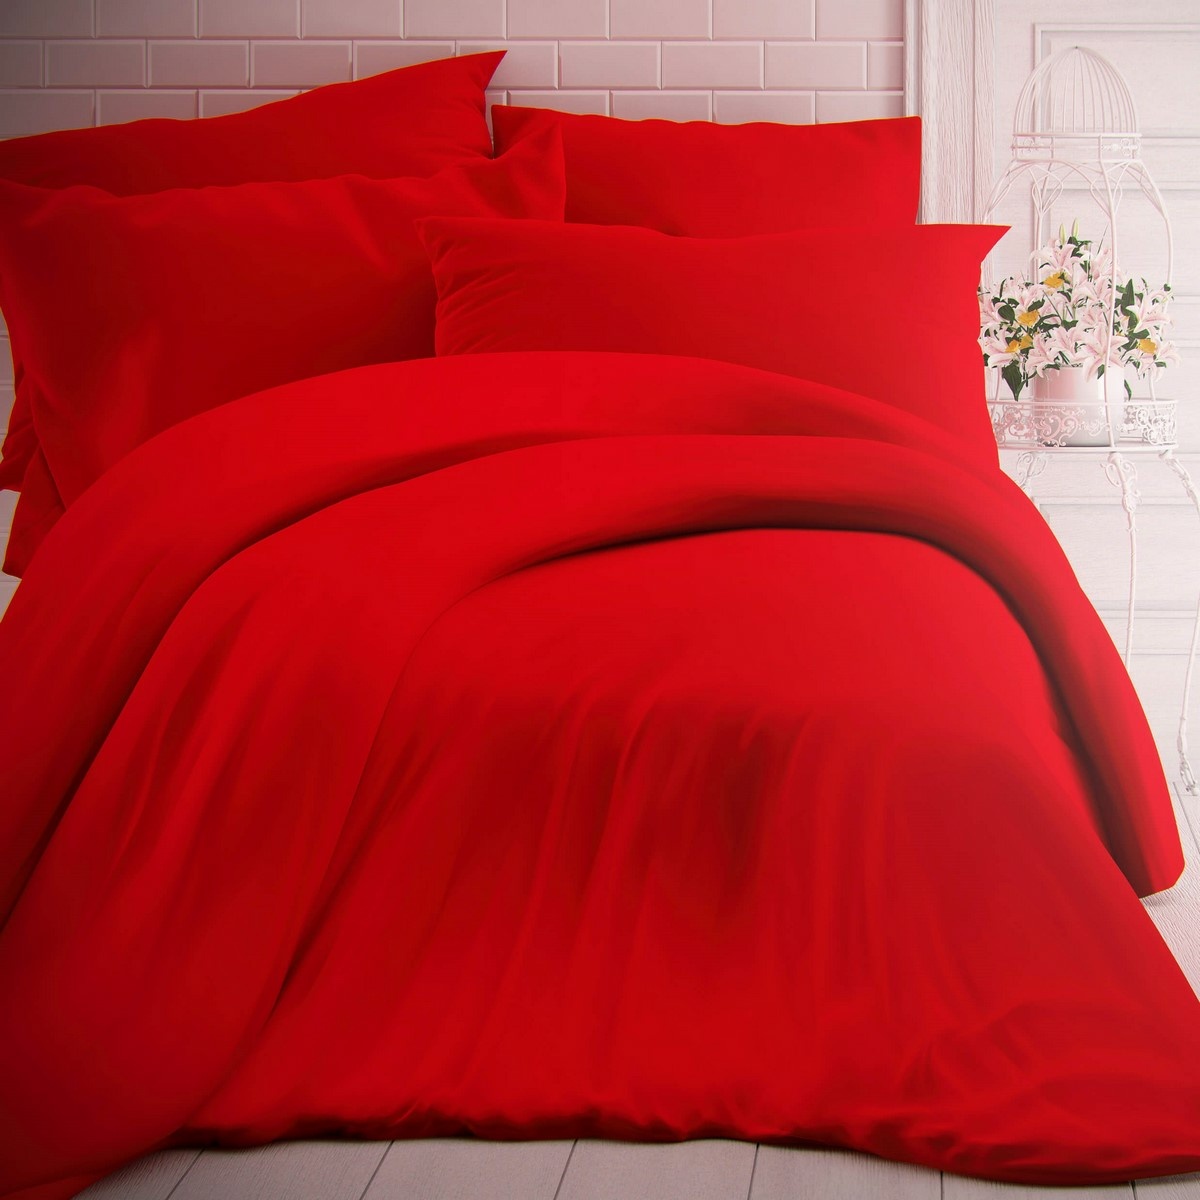 Kvalitex Lenjerie de pat din bumbac roșie, 240 x 200 cm, 2 buc. 70 x 90 cm, portocaliu, 240 x 200 cm, 2 buc. 70 x 90 cm